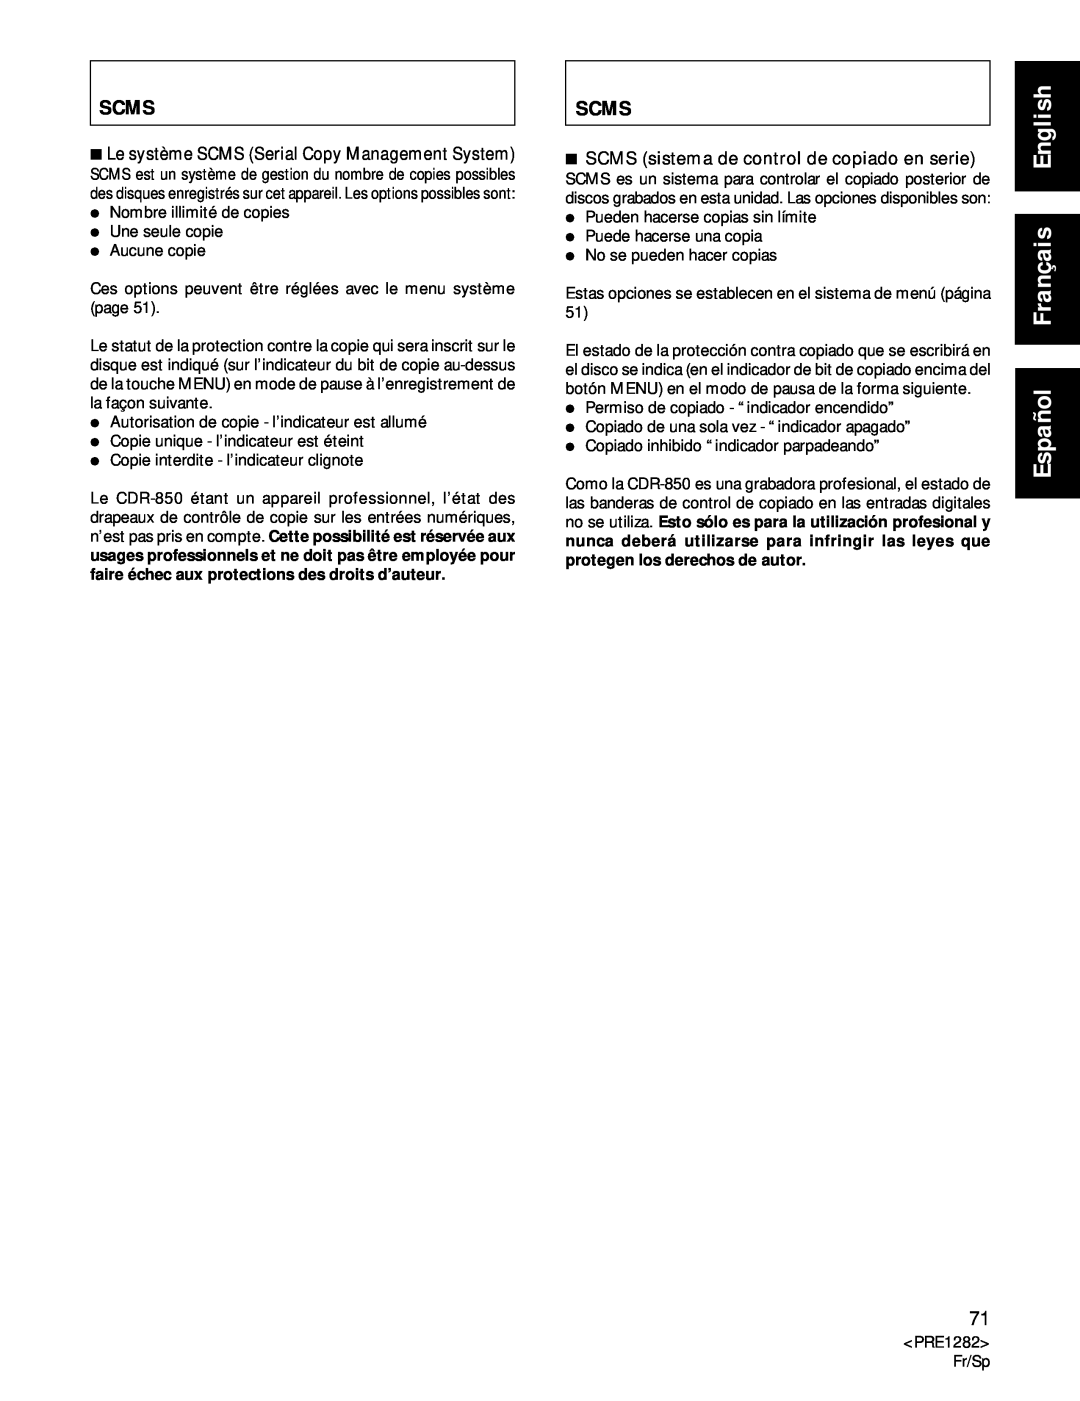 Americana Appliances CDR-850 manual Español Français English, Scms, 7Le système SCMS Serial Copy Management System 